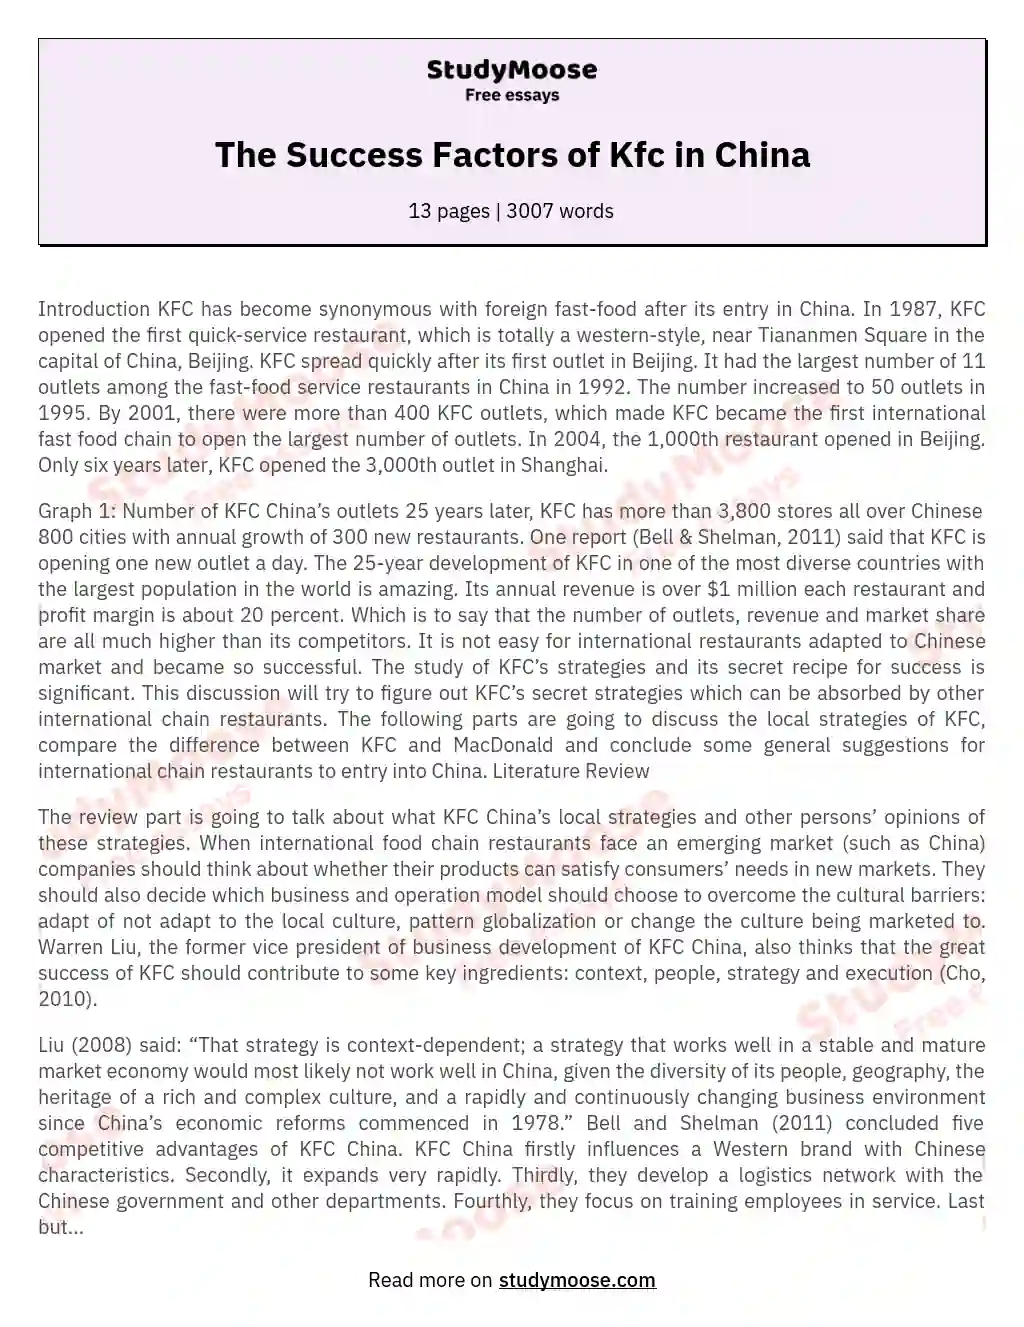 The Success Factors of Kfc in China essay